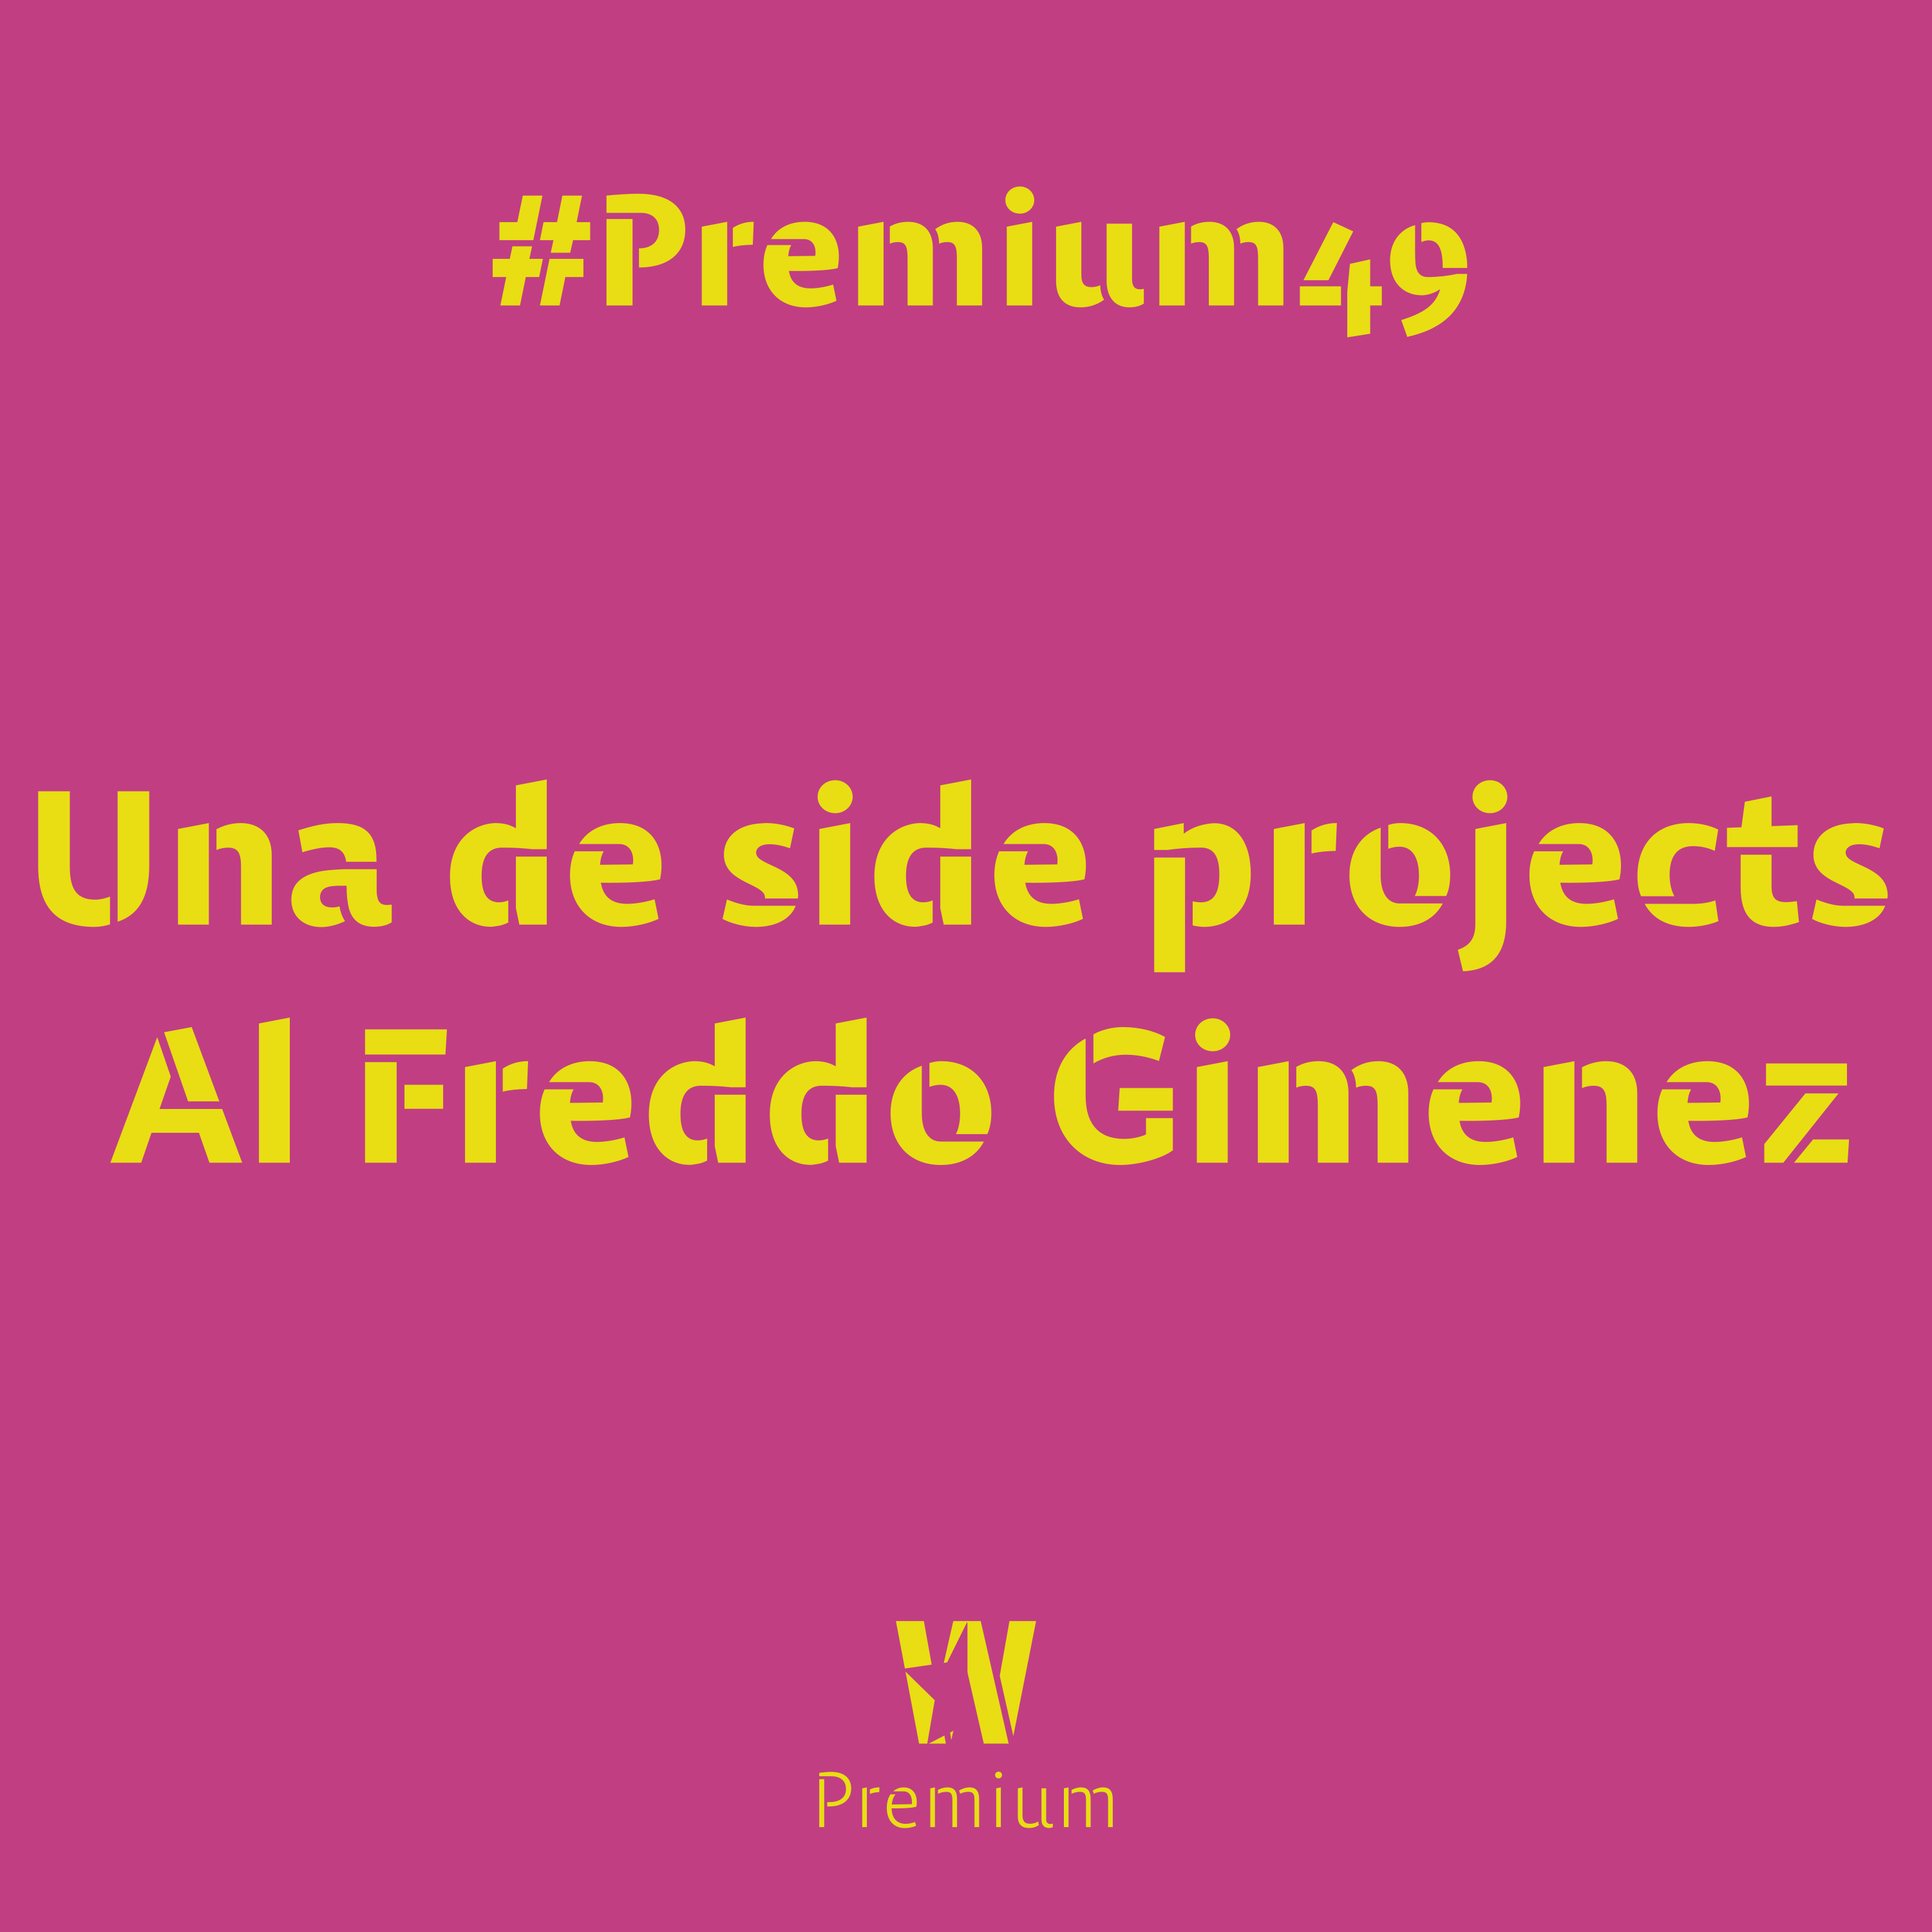 #Premium49 - Una de side projects Al Freddo Gimenez